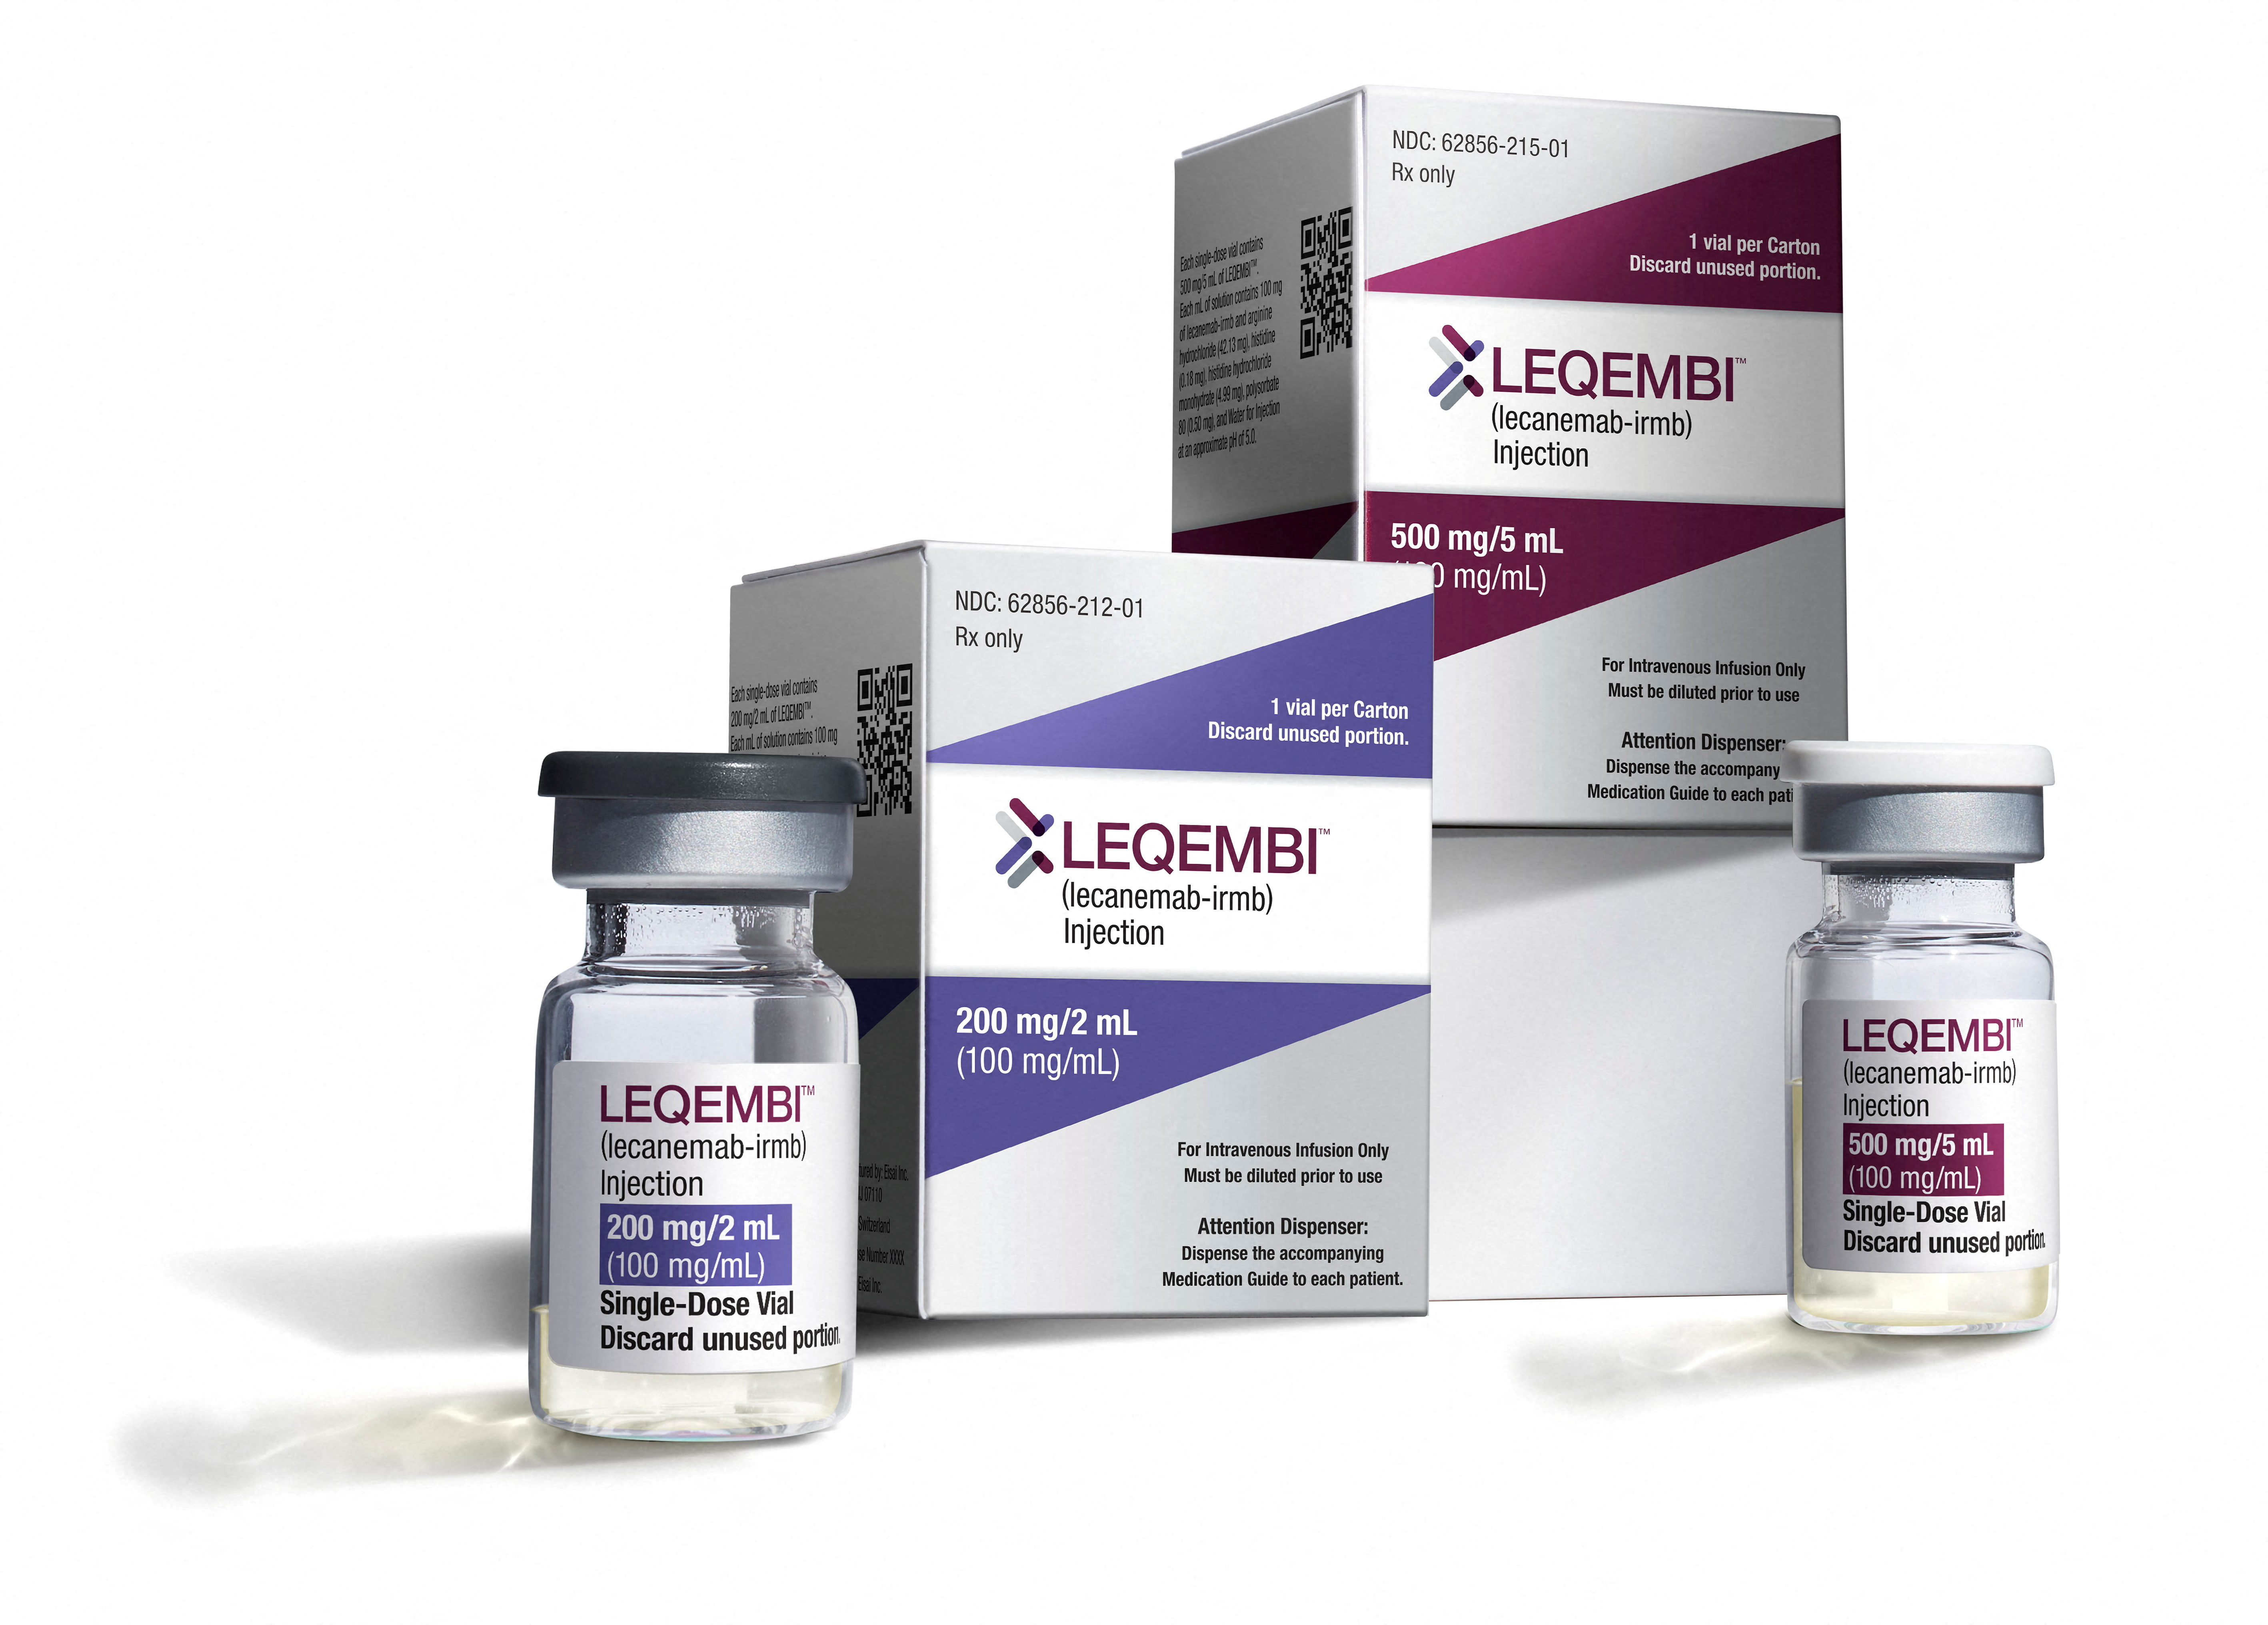 Handout image shows Alzheimer's drug LEQEMBI